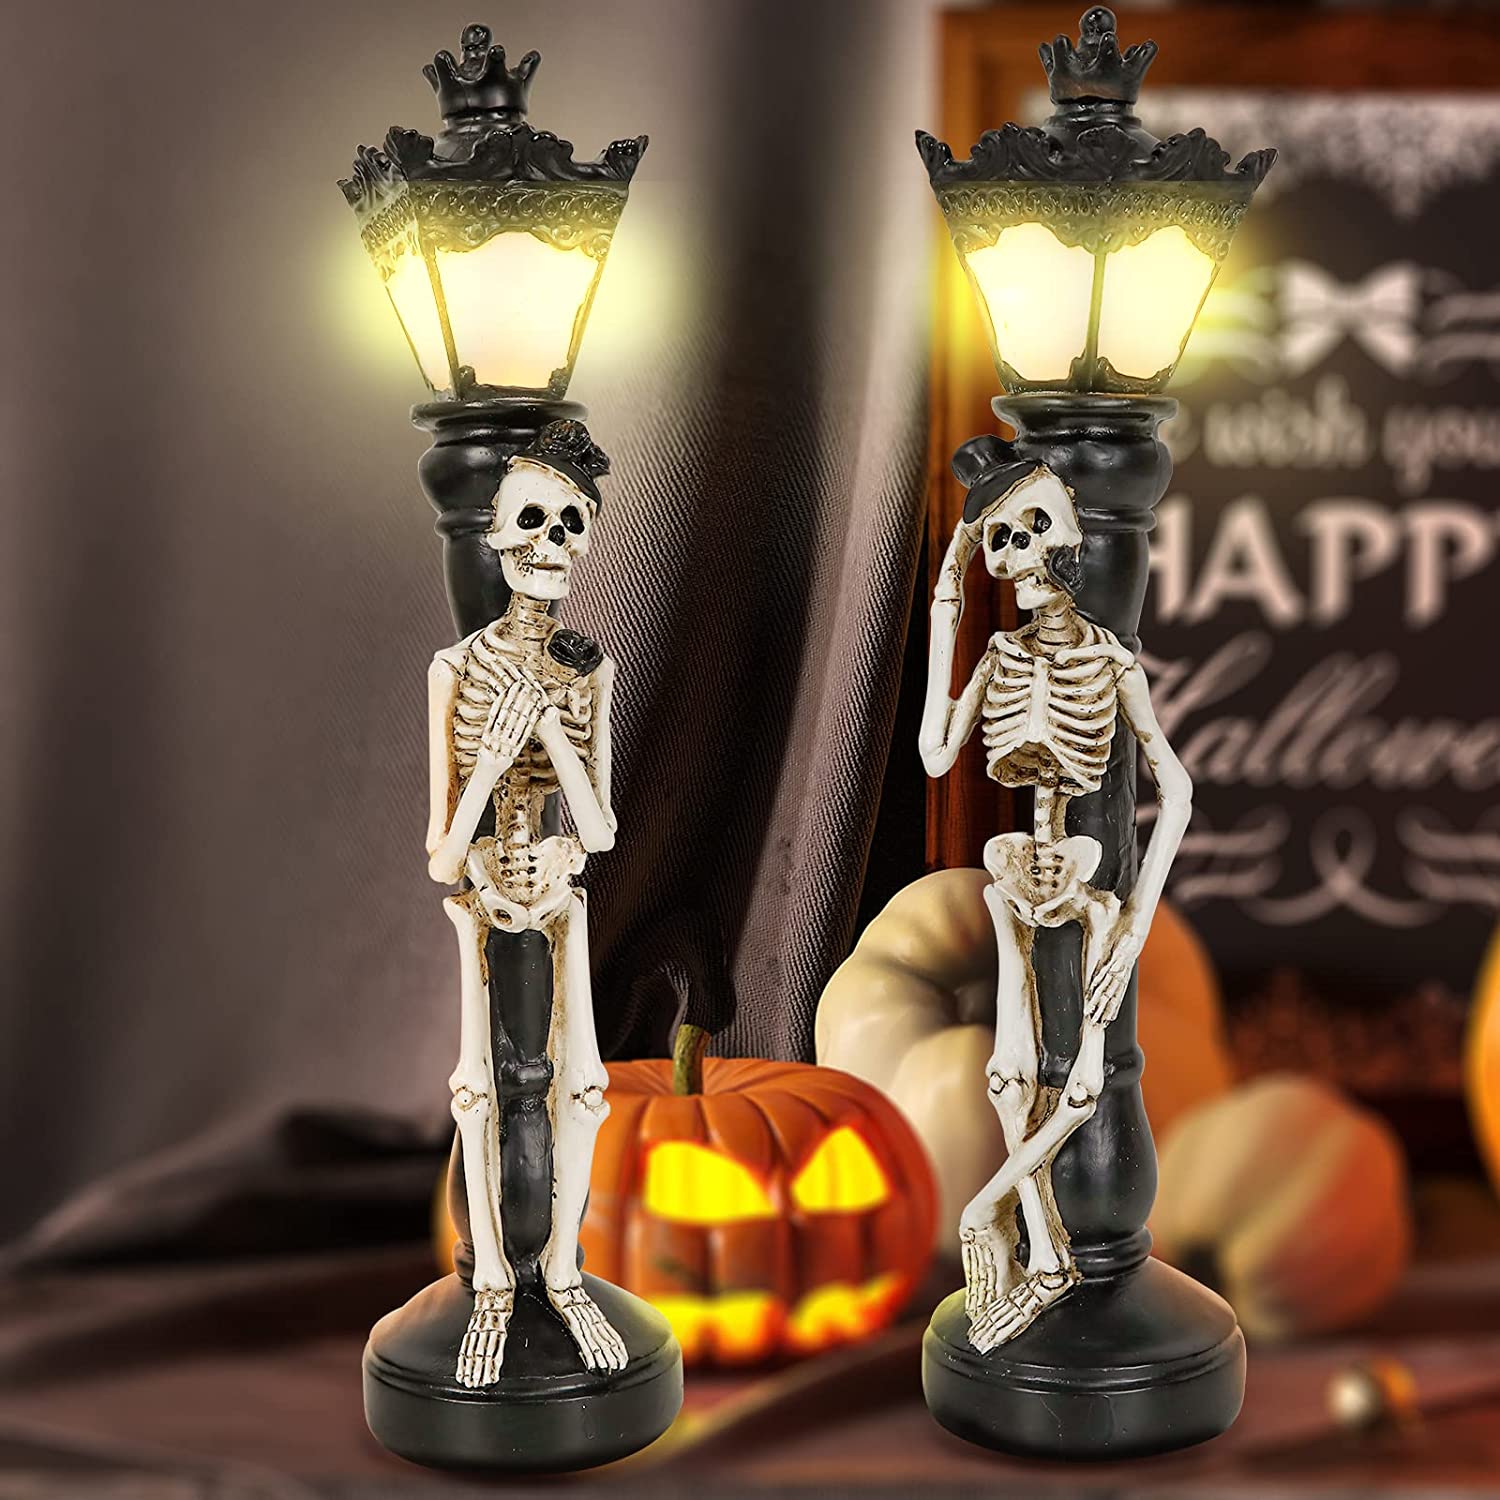 Pair of Halloween Decorations Skeleton Lamp Street Light, Flameless LED Lantern Spooky Decor